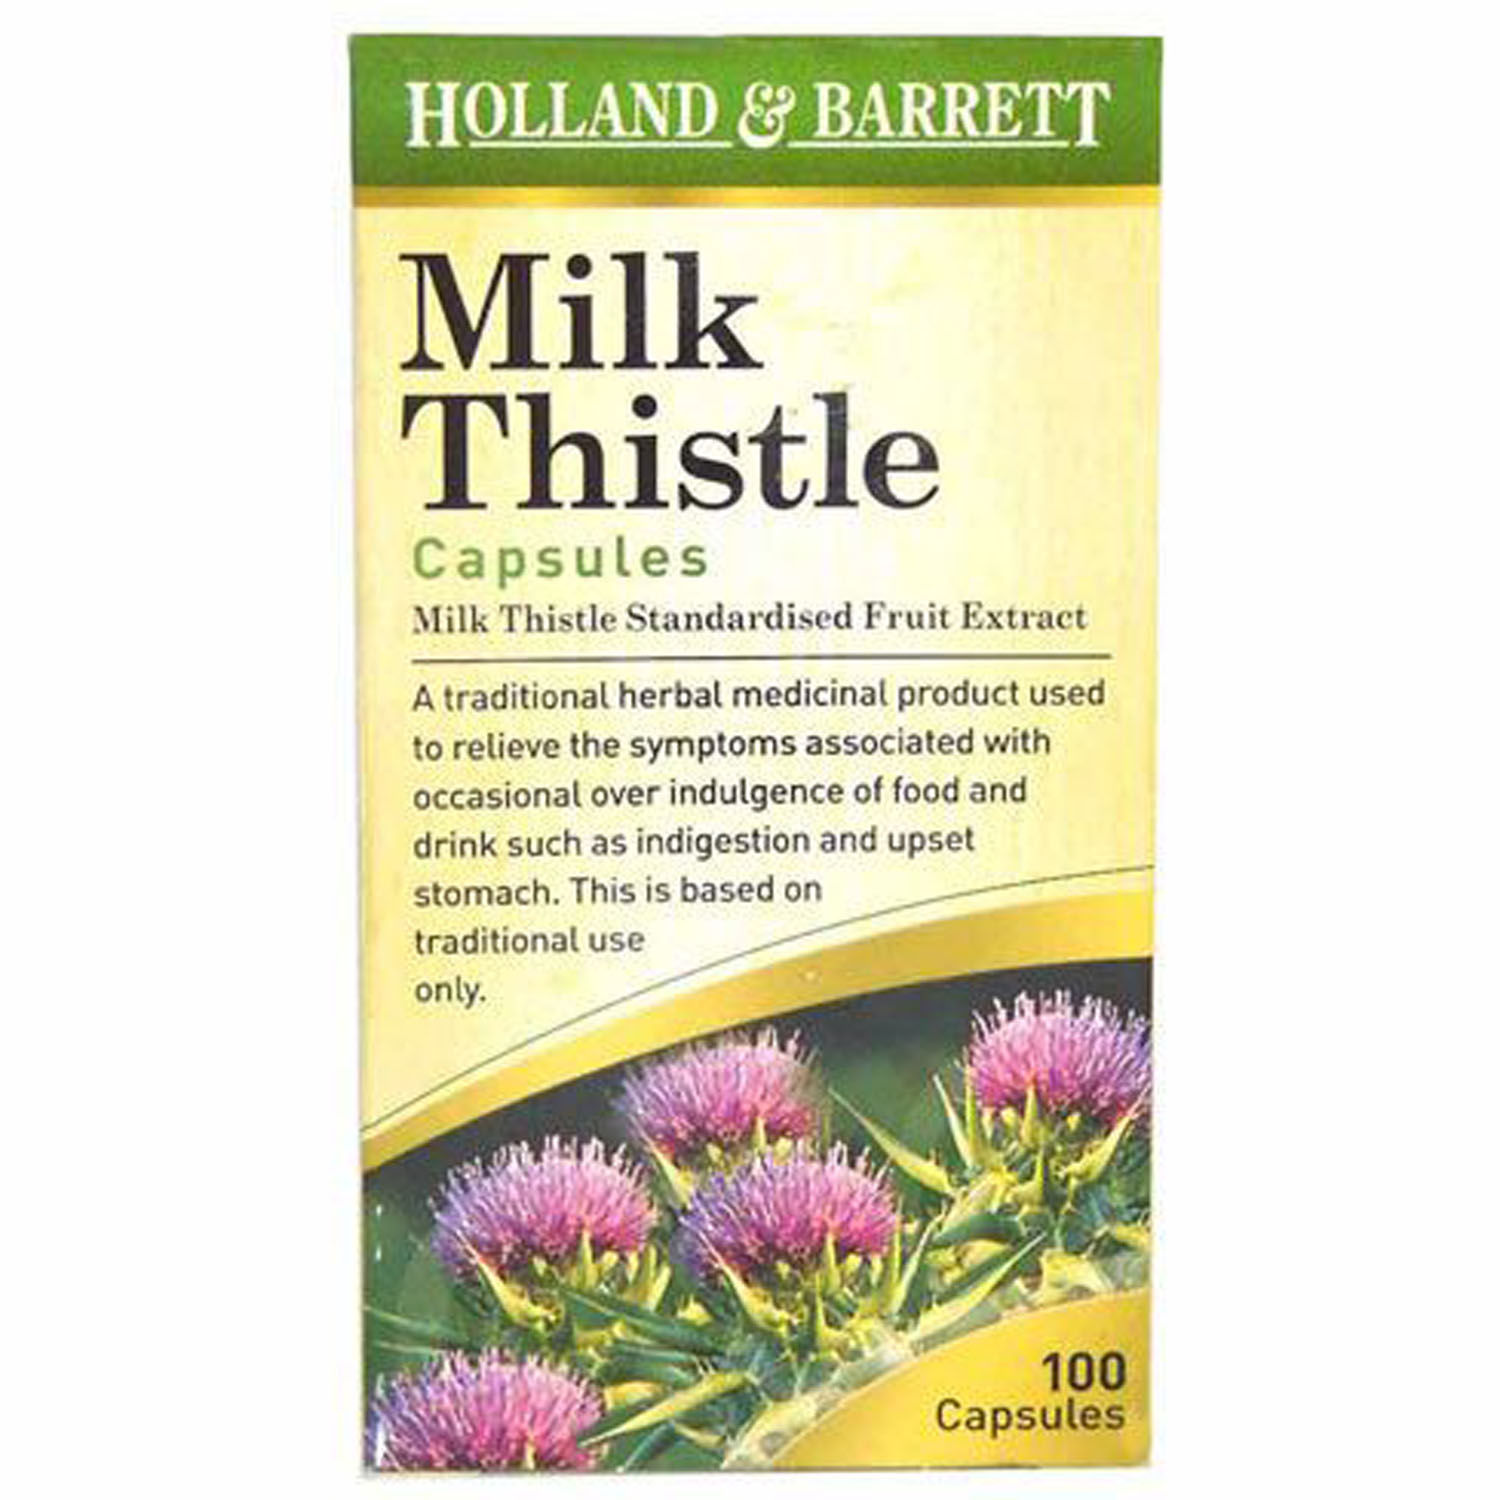 Holland & Barrett Milk Thistle, 100 Capsules, Pack of 1 